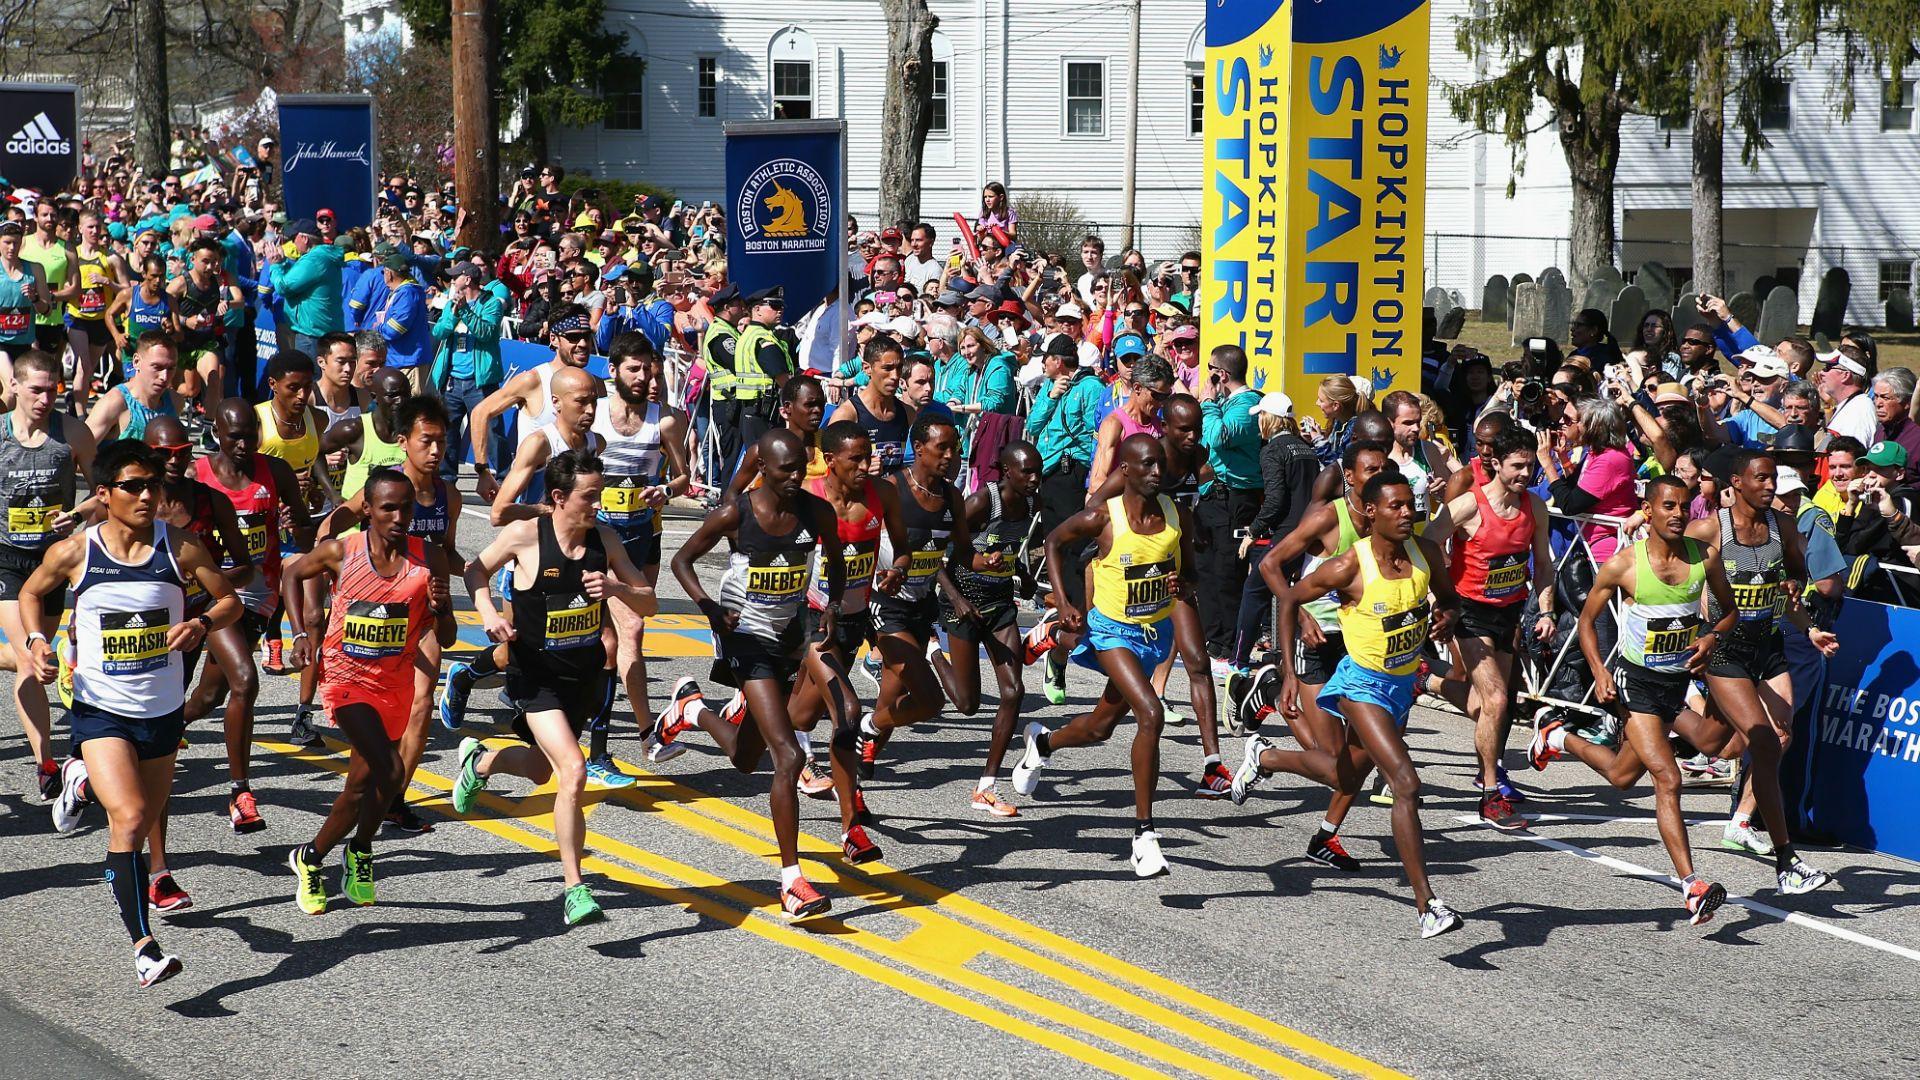 Boston Marathon 2016: Lemi Berhanu Hayle, Atsede Baysa prevail